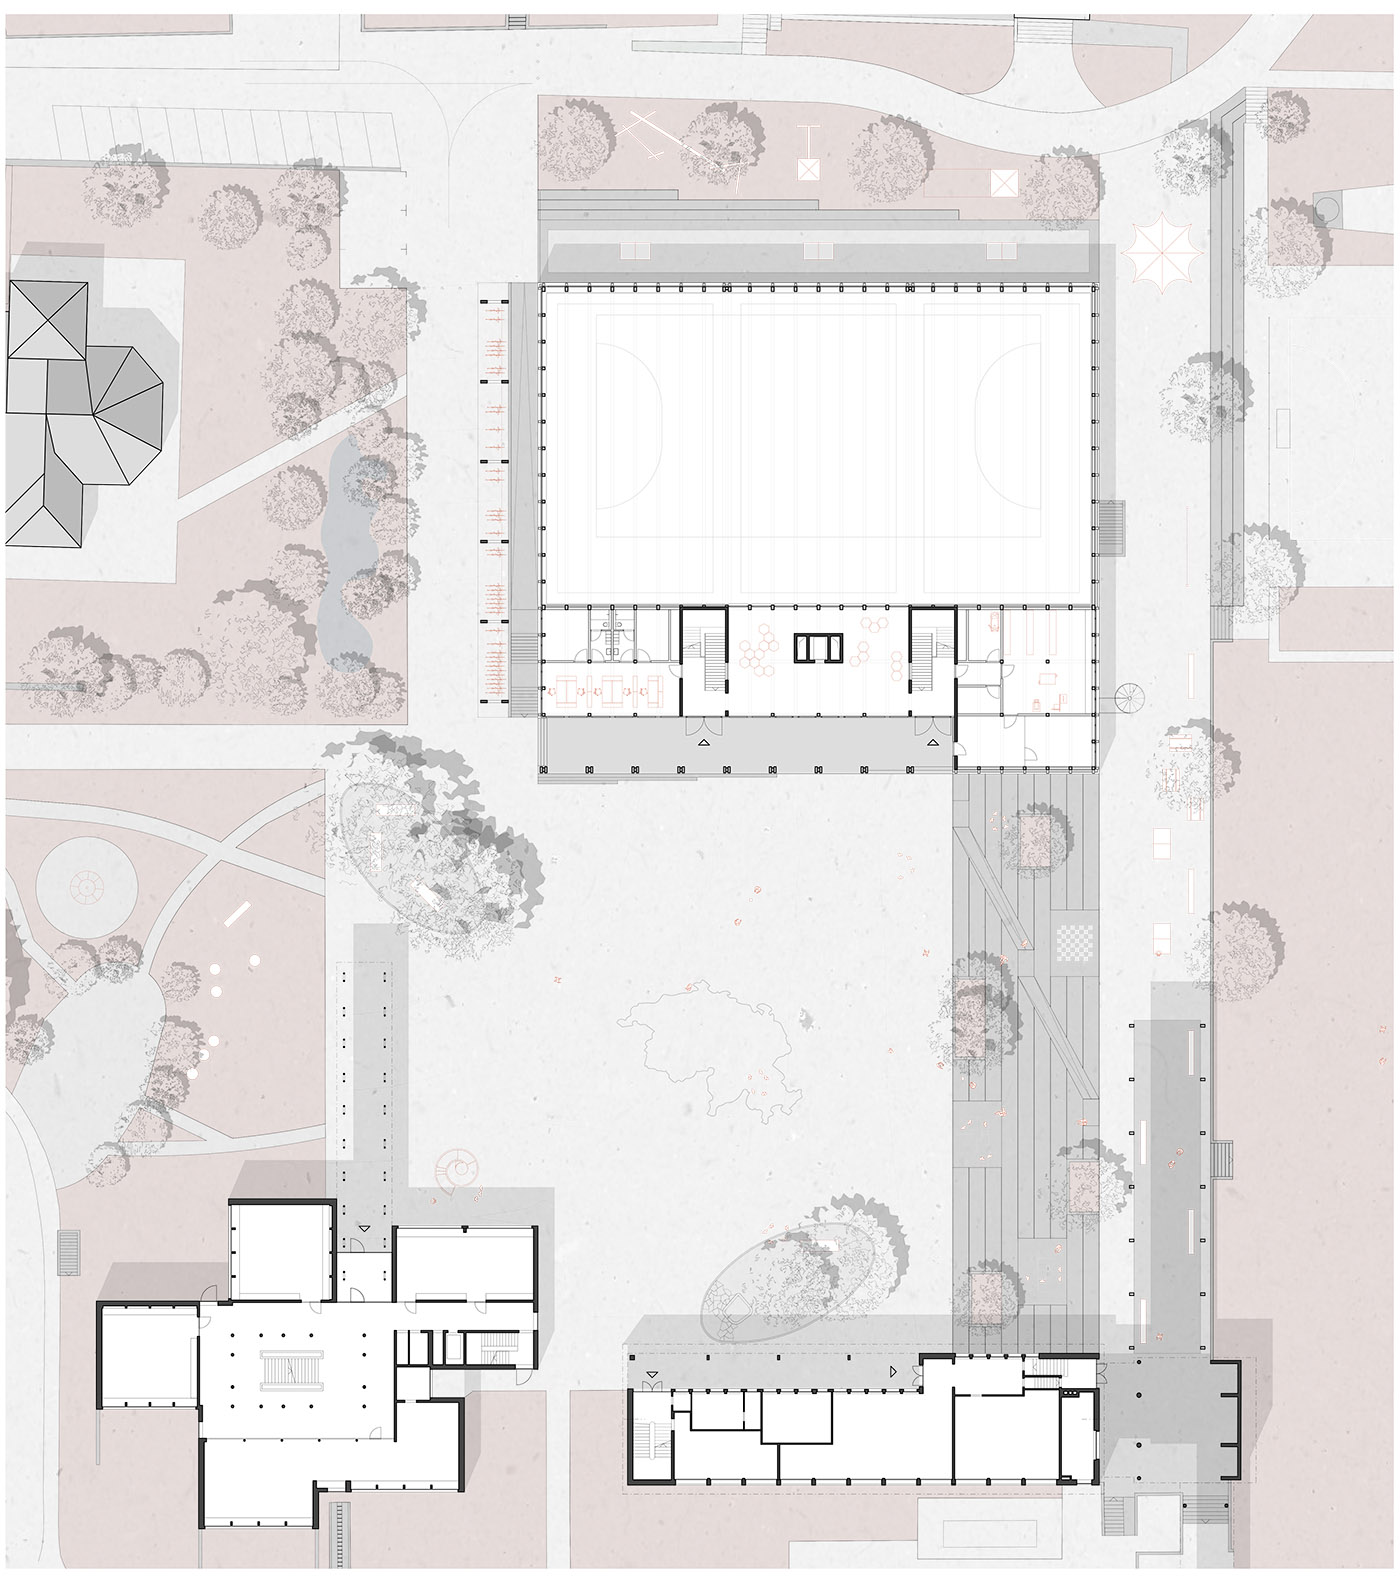 buan-architekten-wettbewerb-chilefeld-dagmersellen-grundriss-erdgeschoss